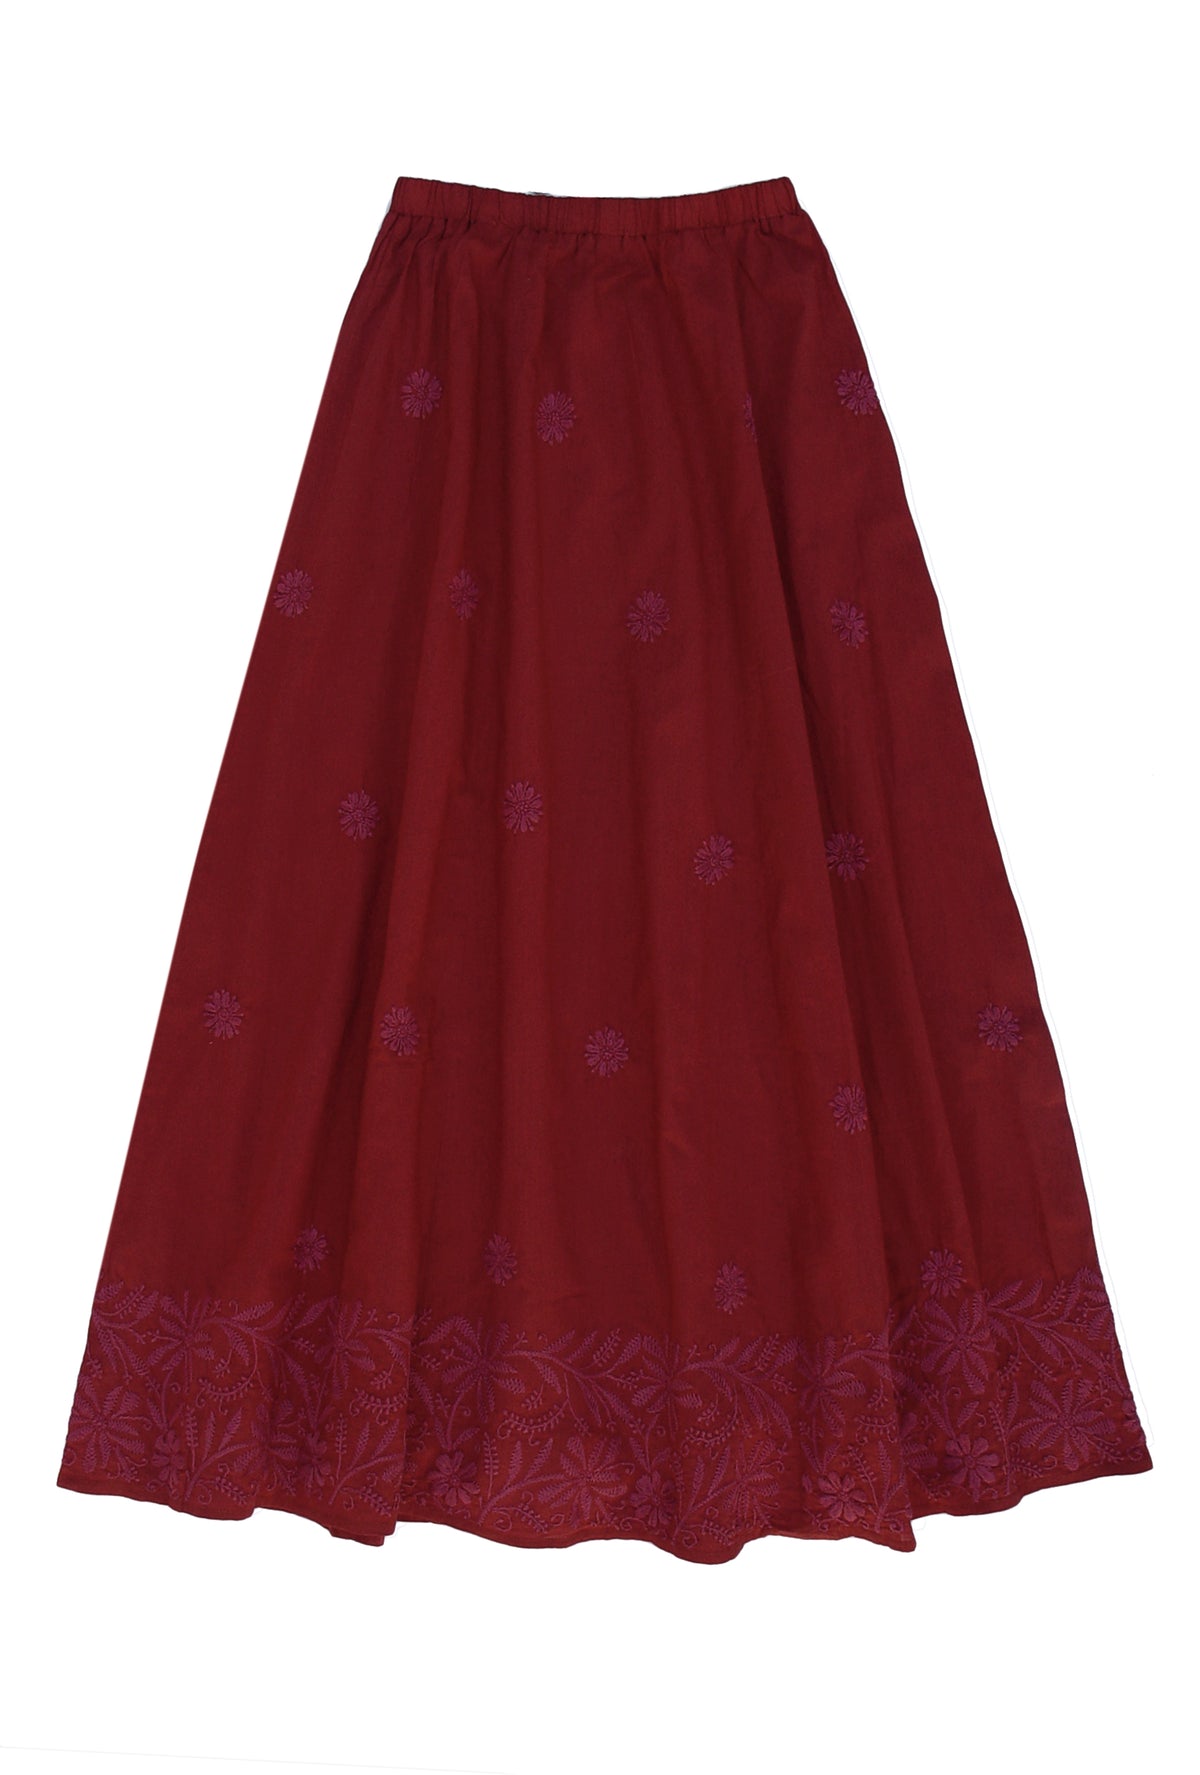 ILA Pure Cotton Hand Embroidered Skirt